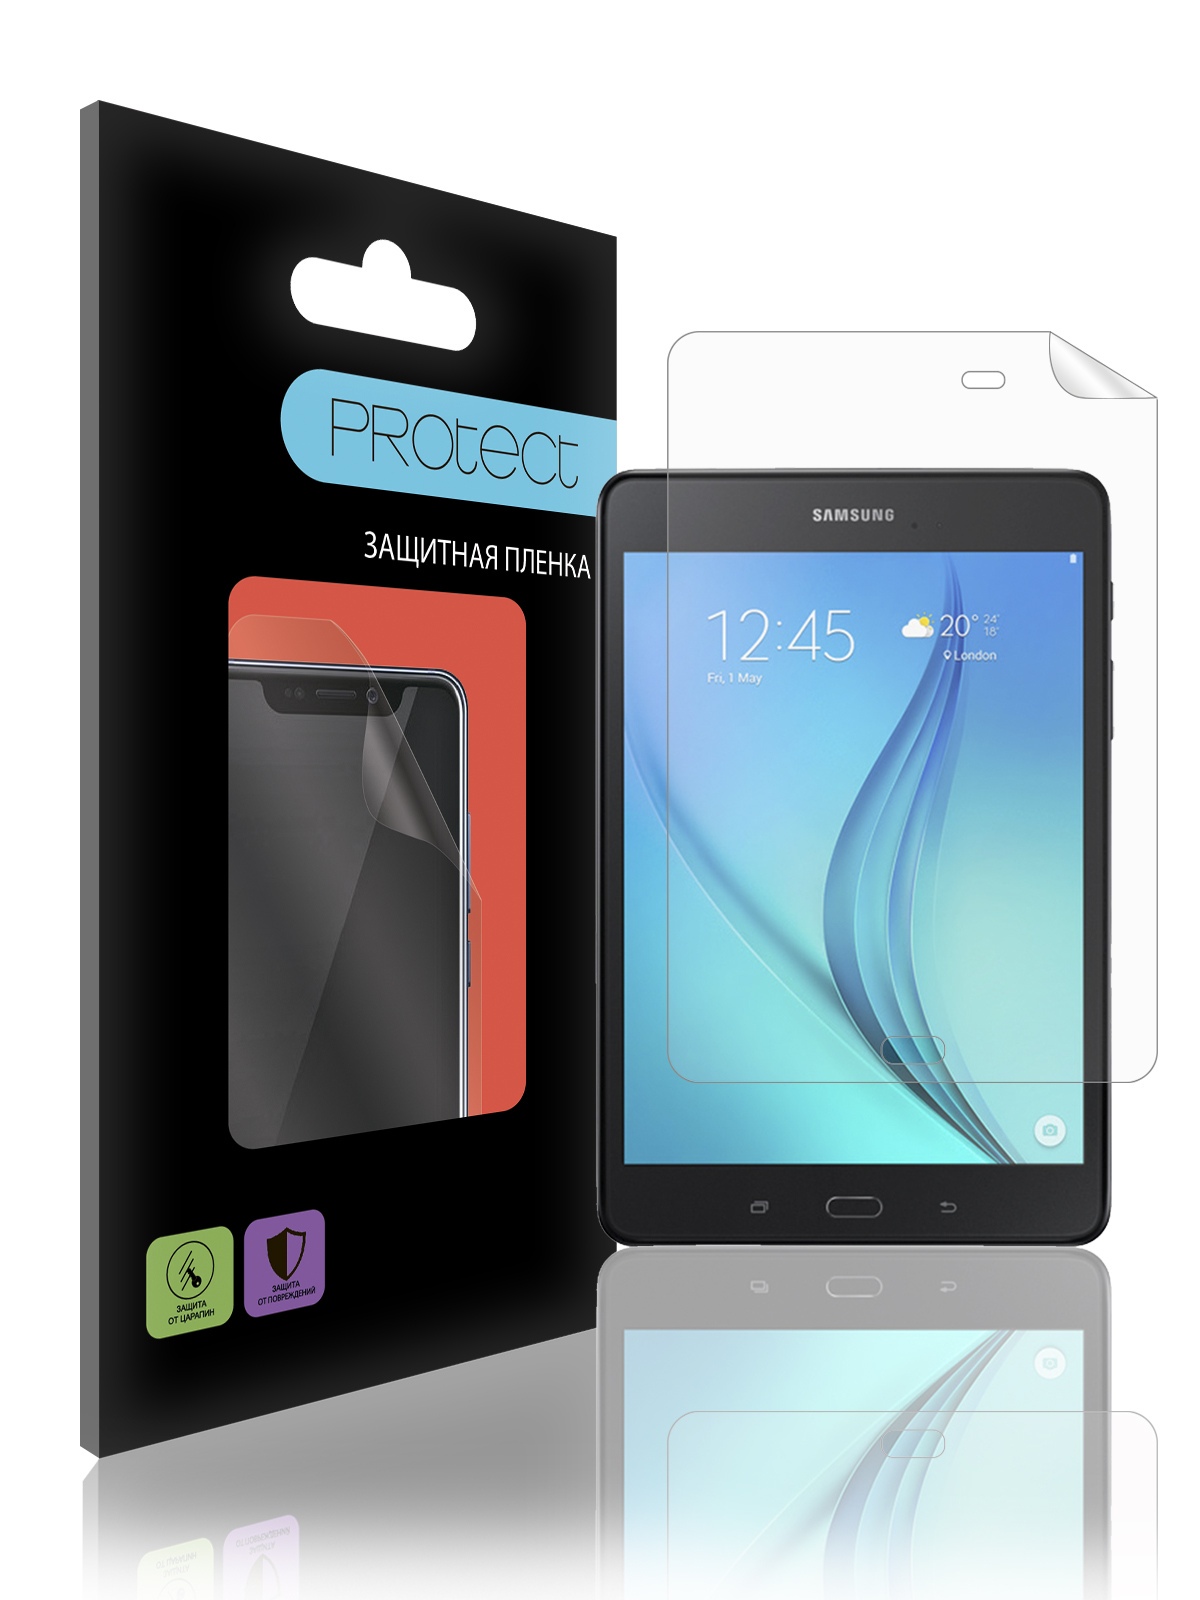 Защитная пленка PROtect для Samsung Galaxy Tab A 8.0 SM-T350 глянцевая (31415)